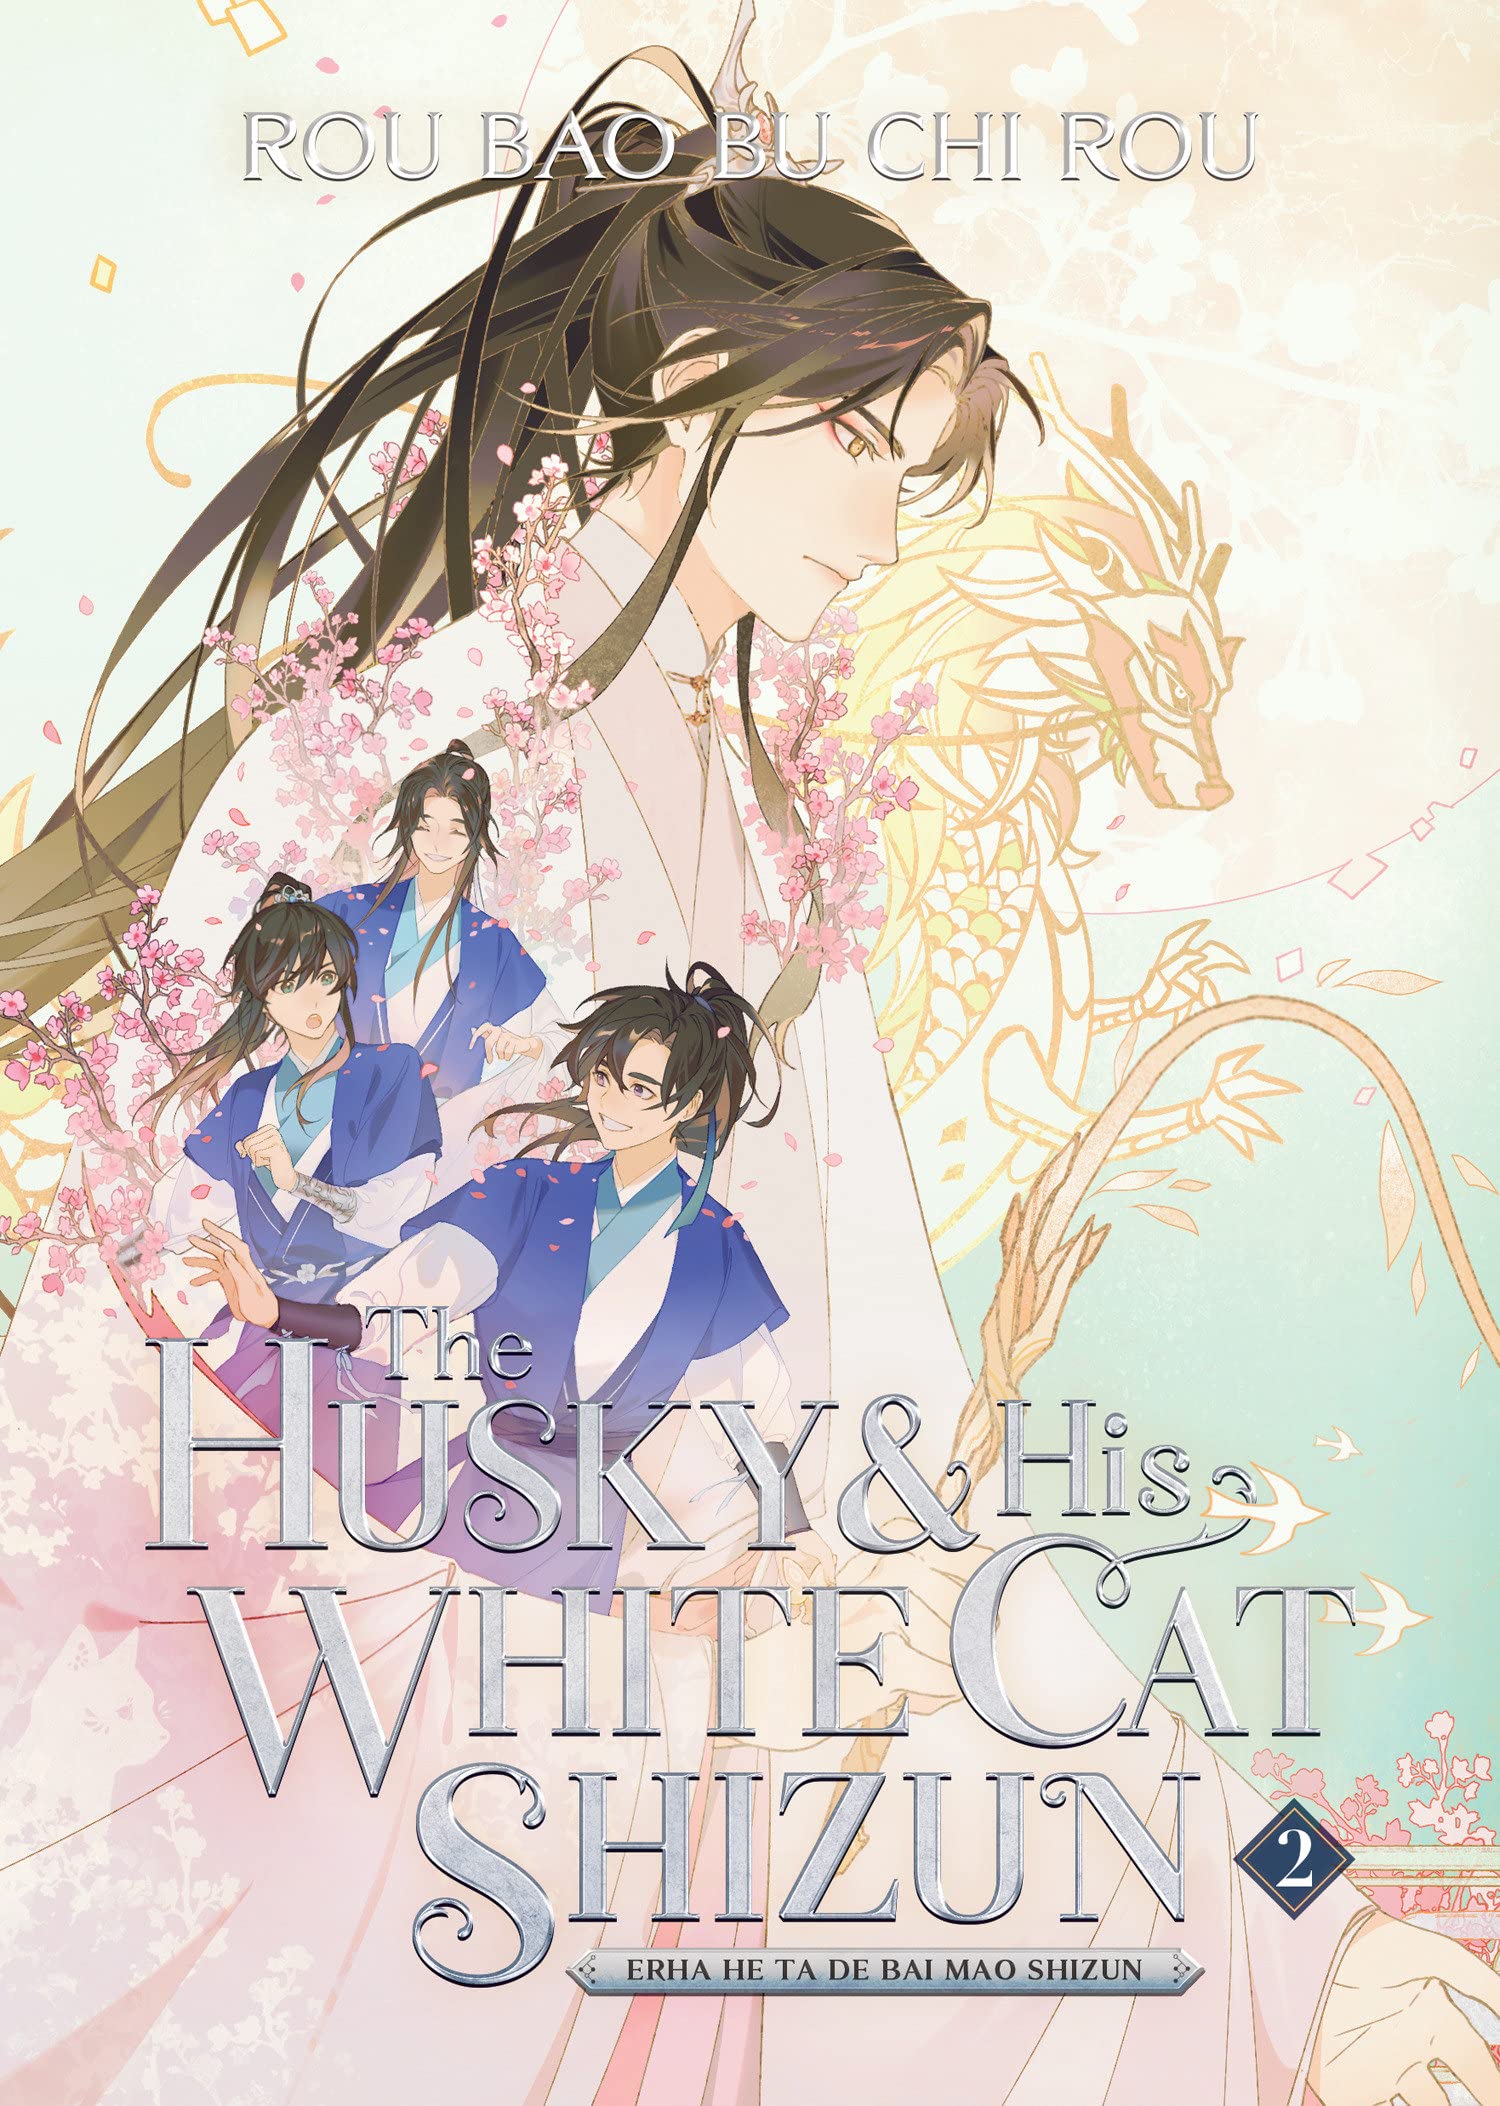 The Husky and His White Cat Shizun: Erha He Ta de Bai Mao Shizun (Novel) Vol. 2 (Paperback)